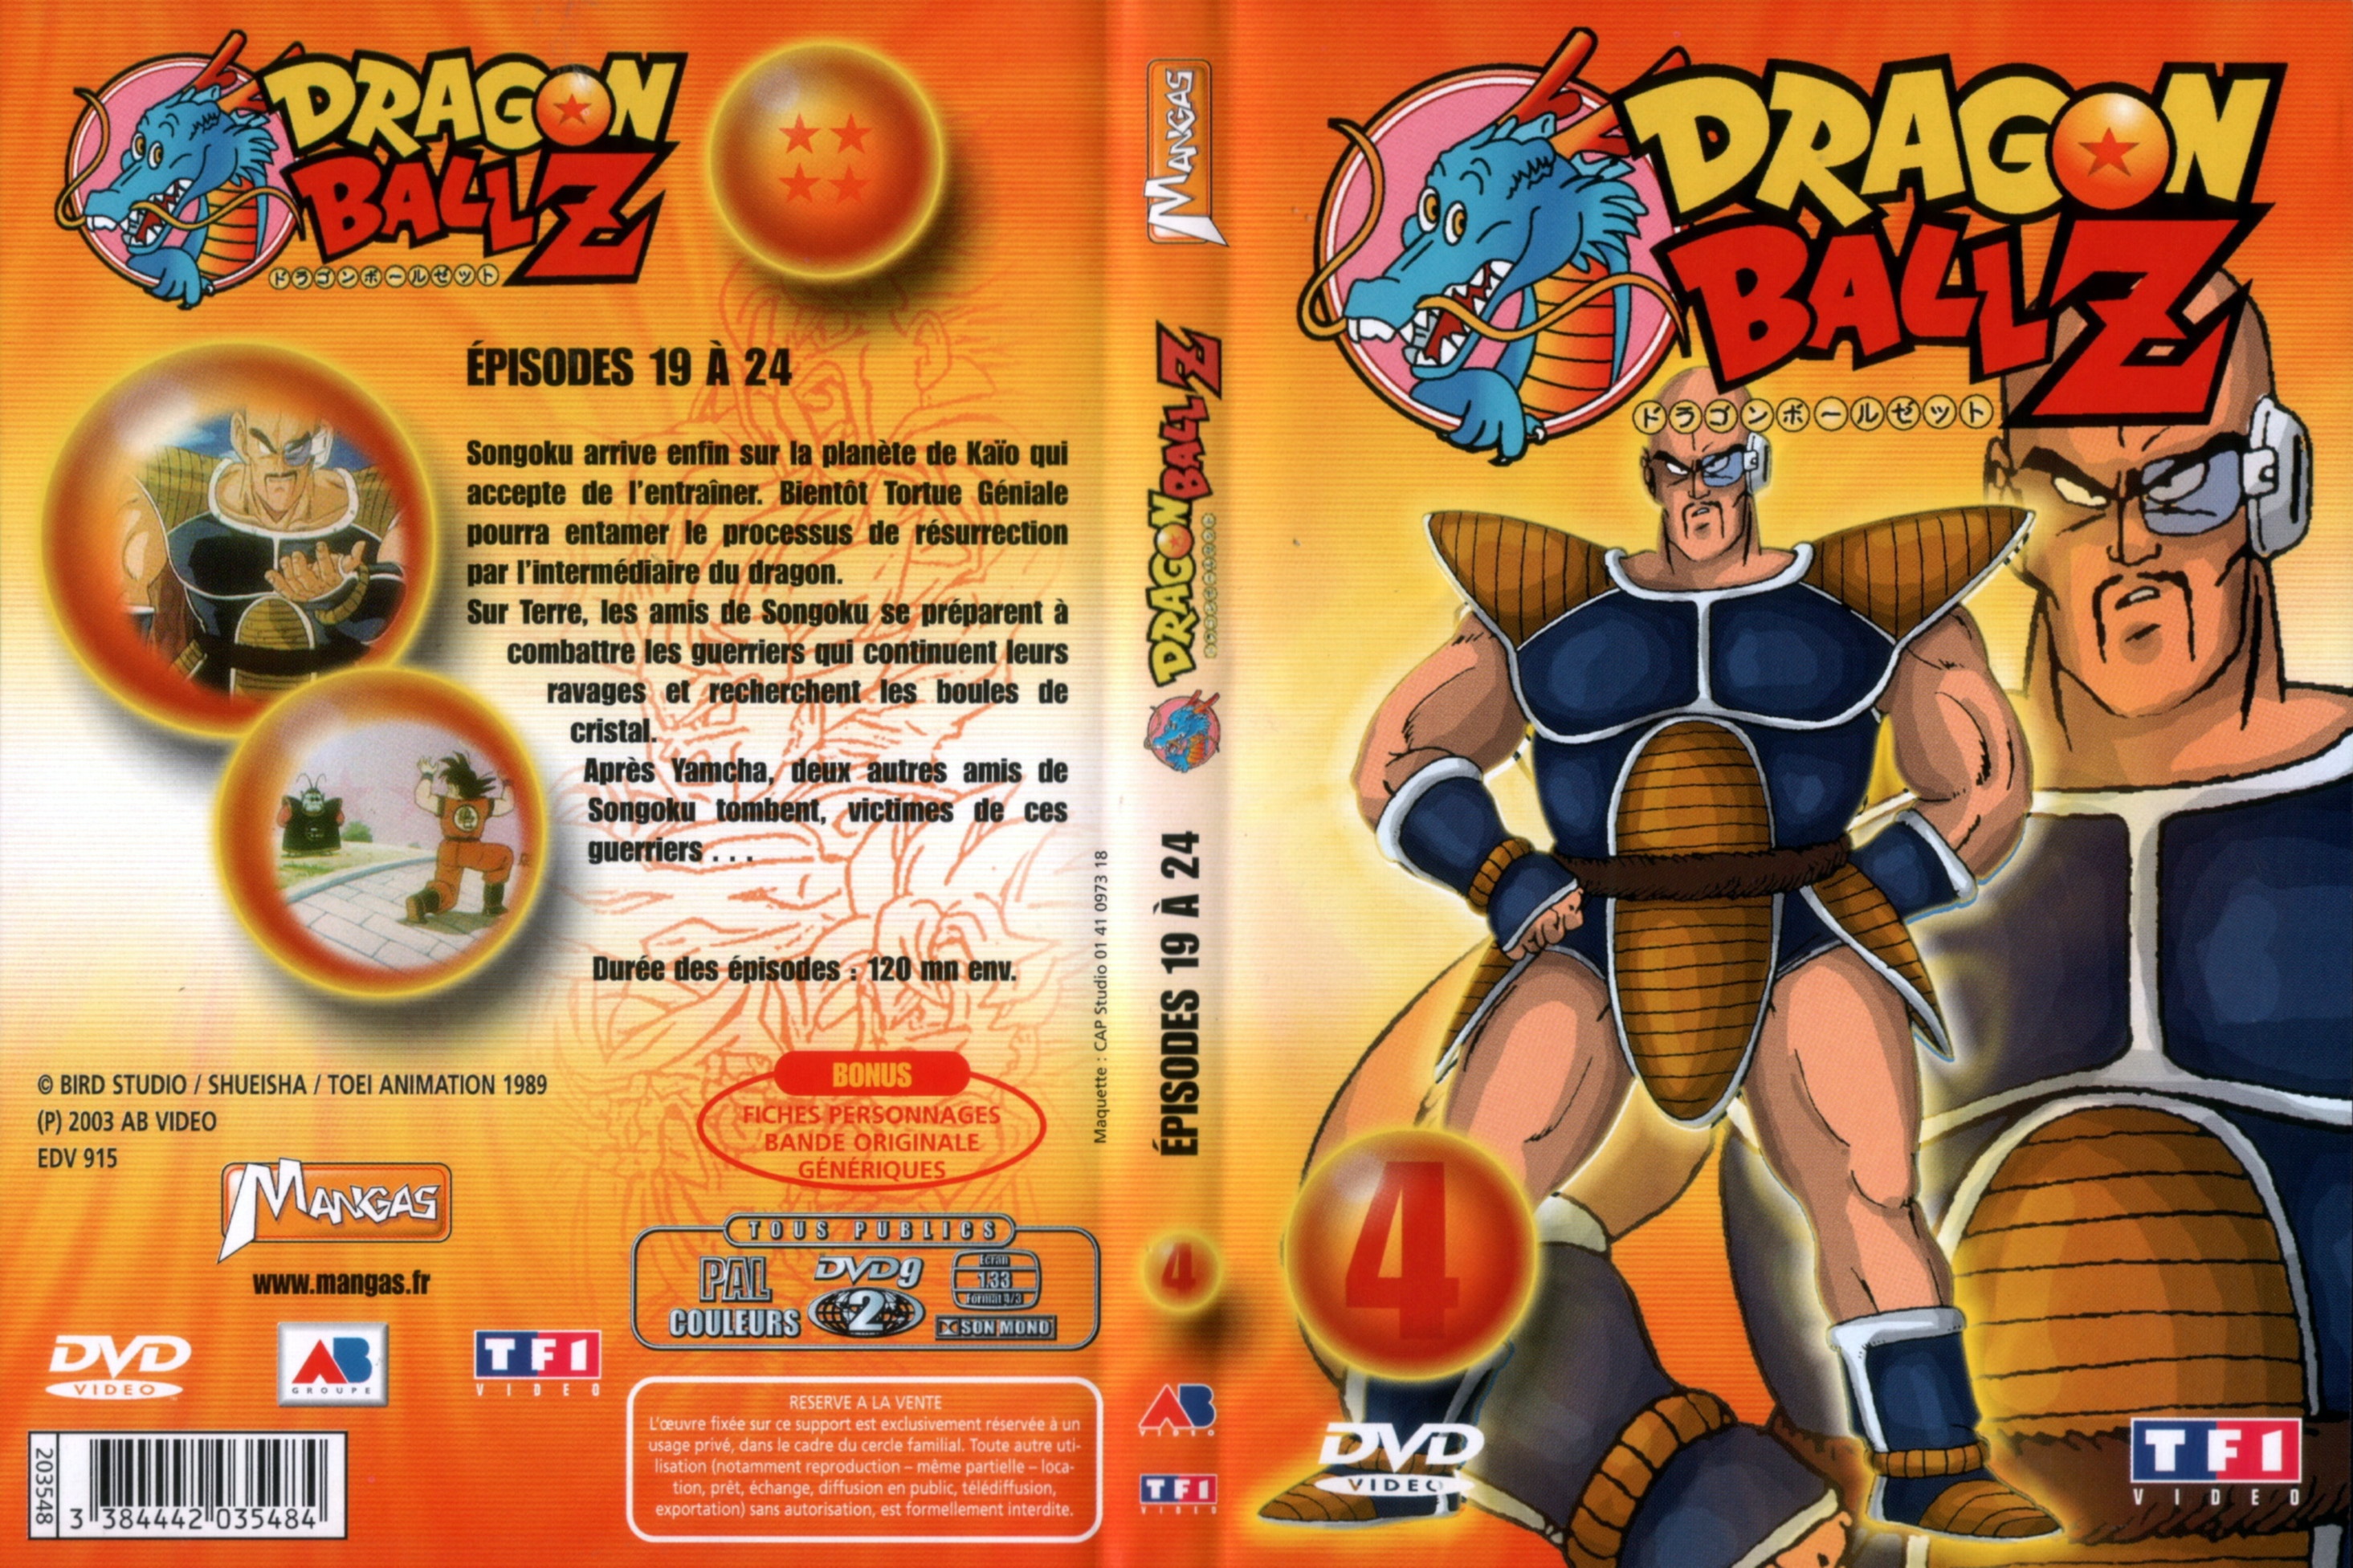 Jaquette DVD Dragon ball Z vol 04